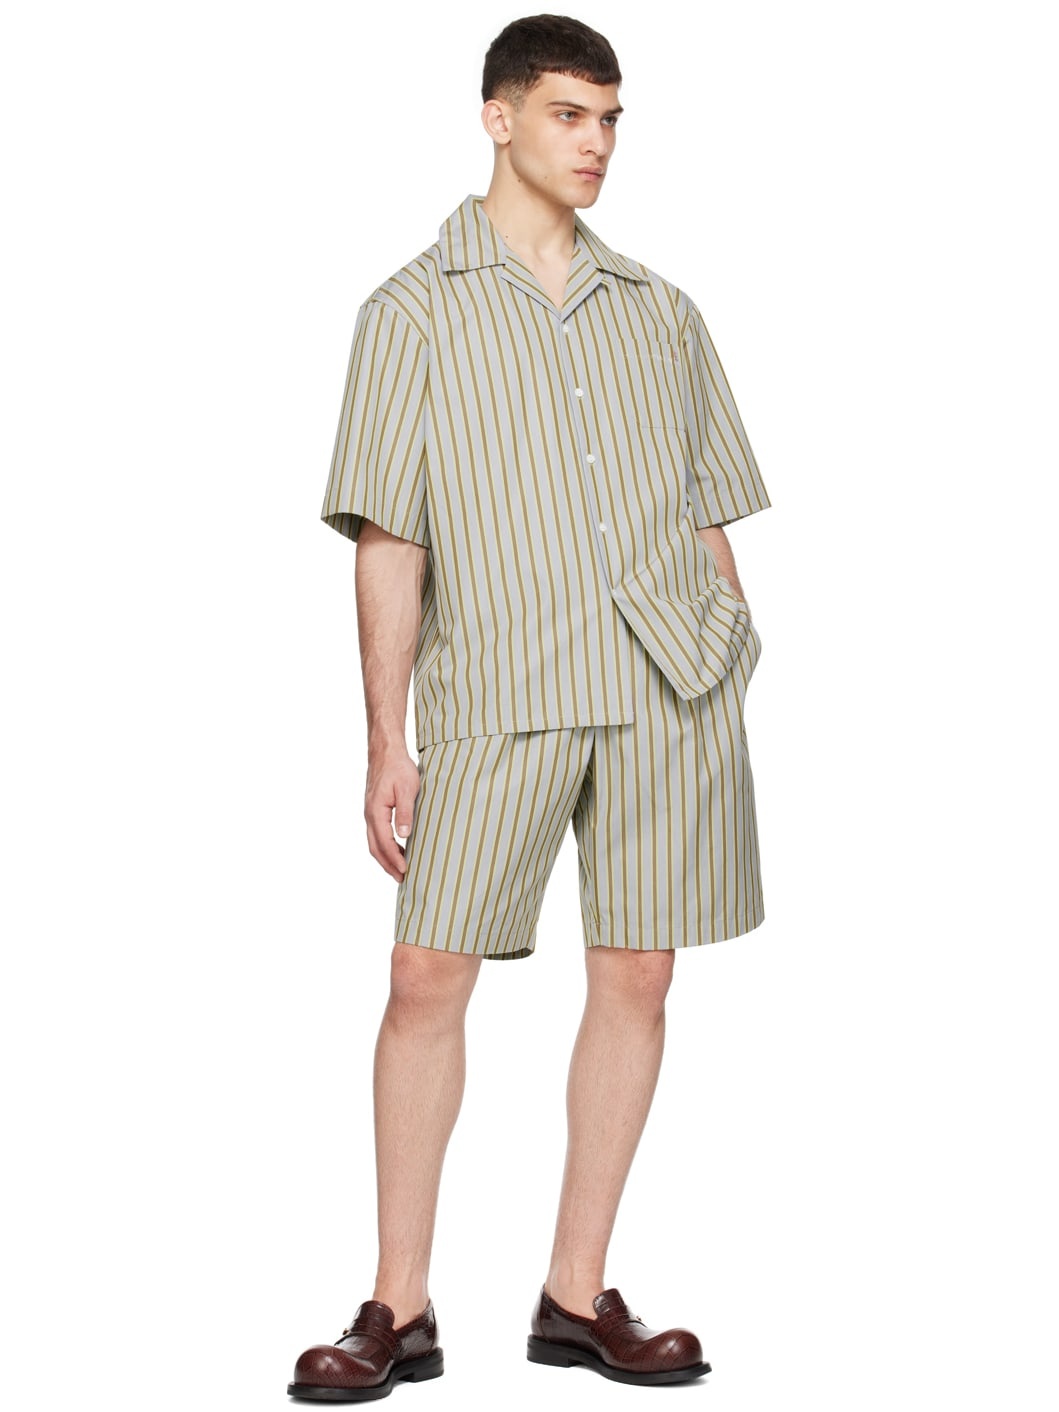 Brown & Gray Striped Shirt - 4